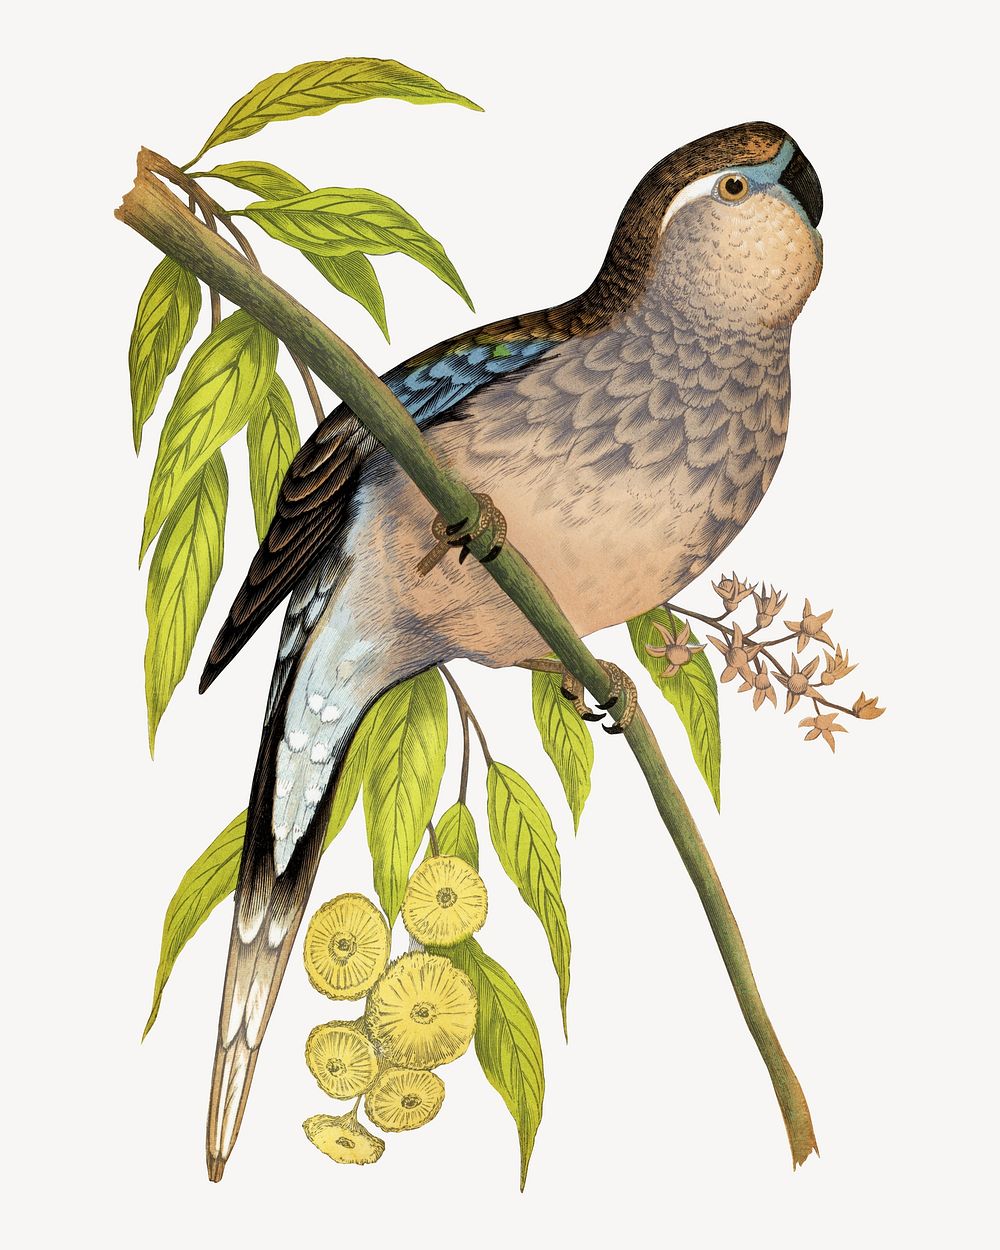 Bourke's parakeet vintage bird illustration. Remixed by rawpixel.